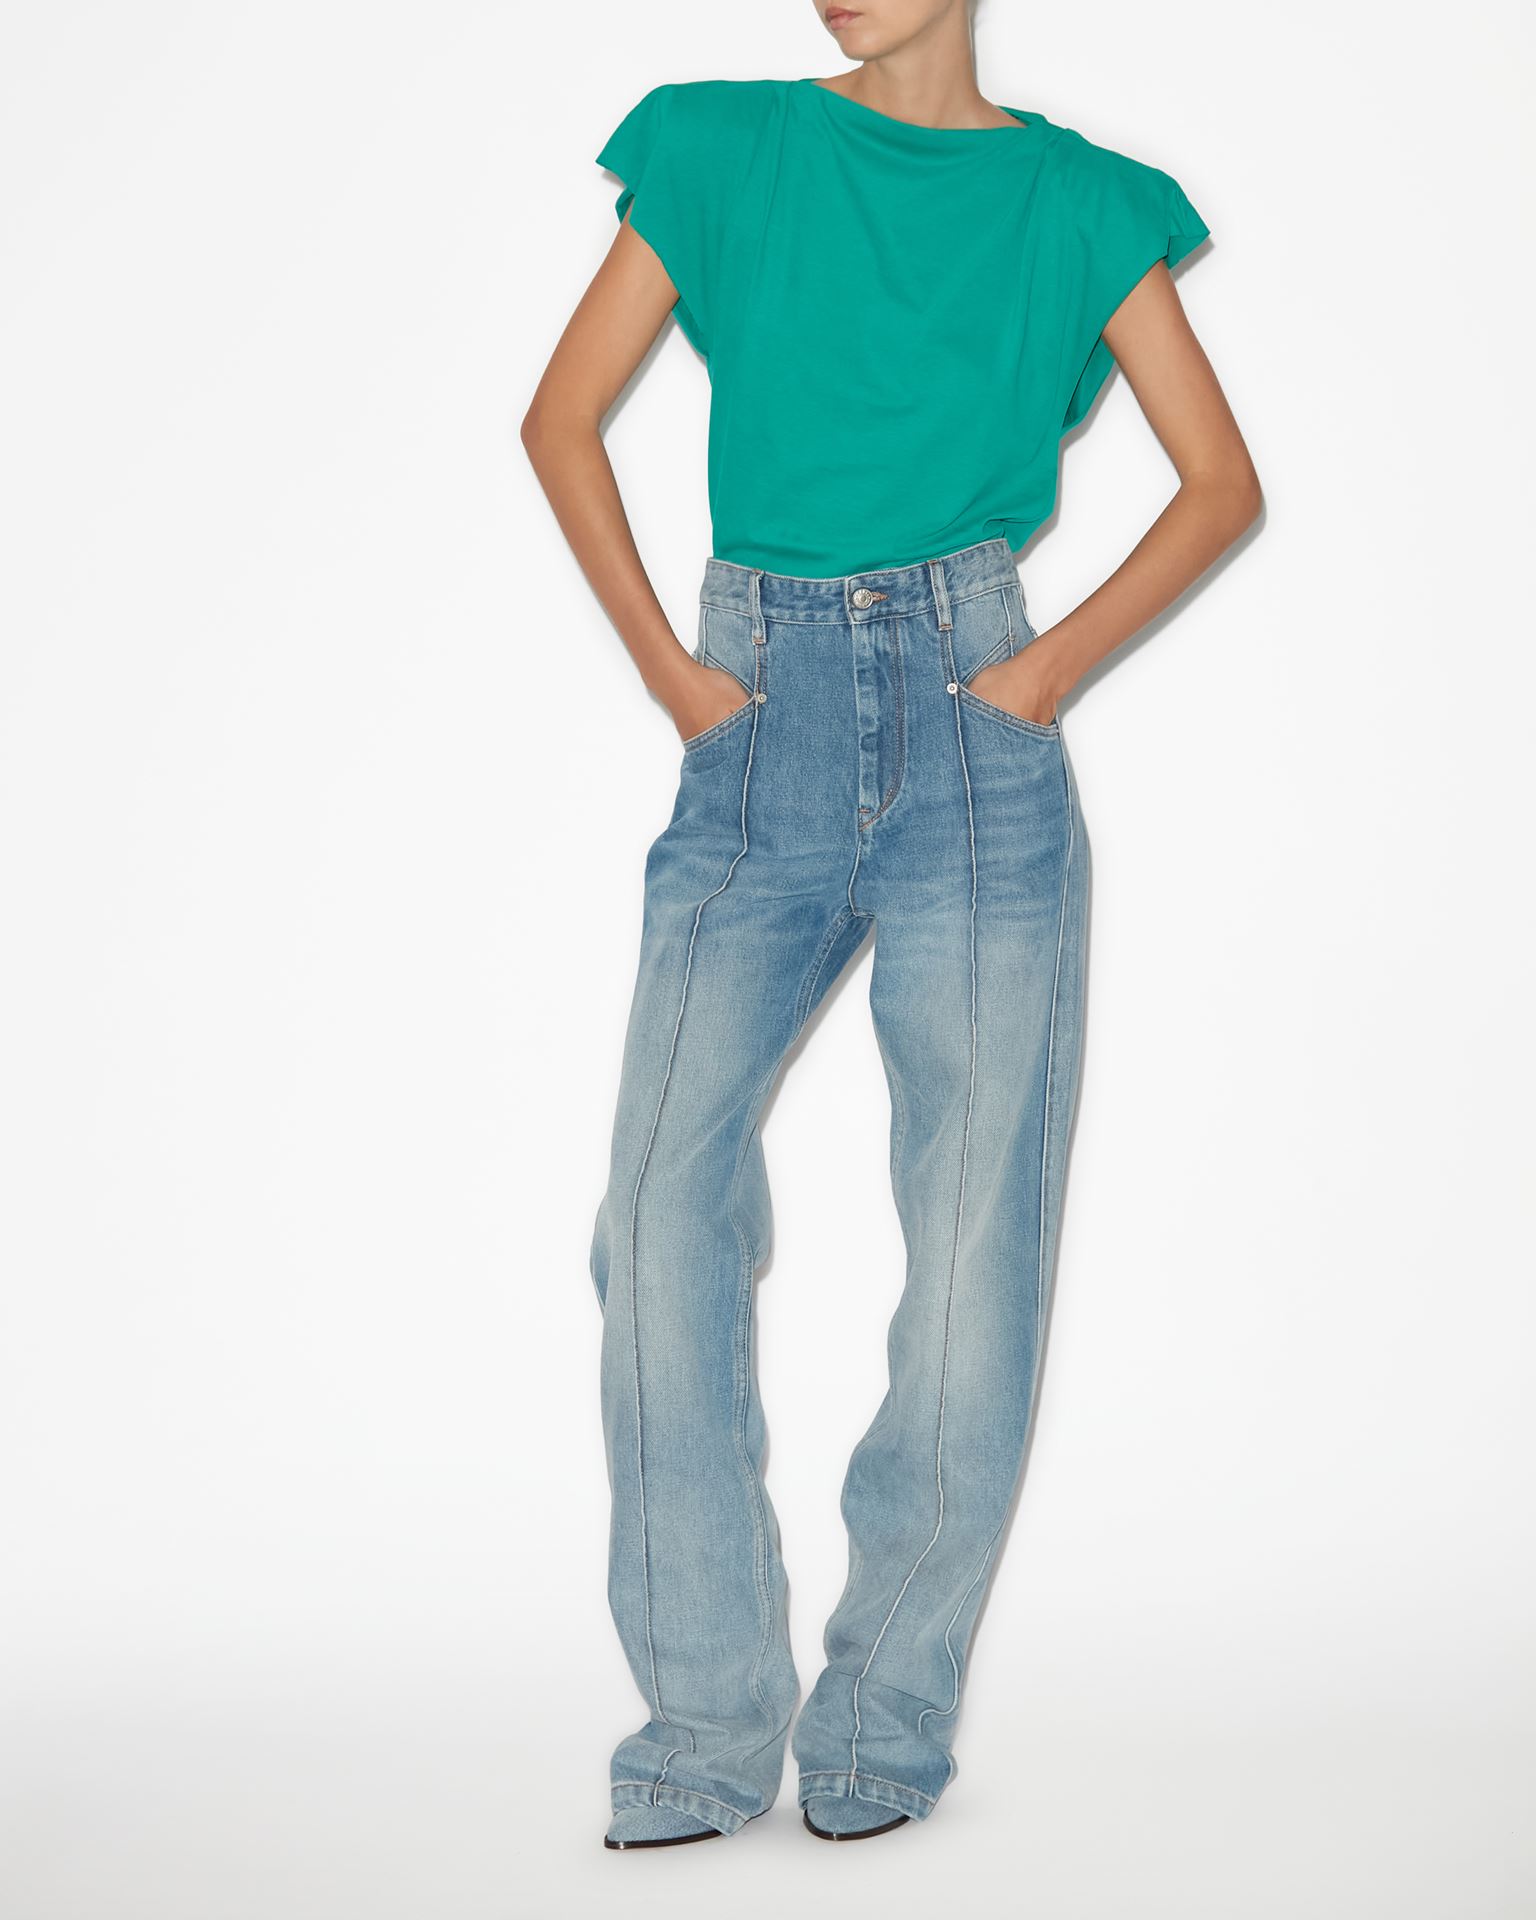 Isabel Marant, Sebani Tee-shirt - Women - Green